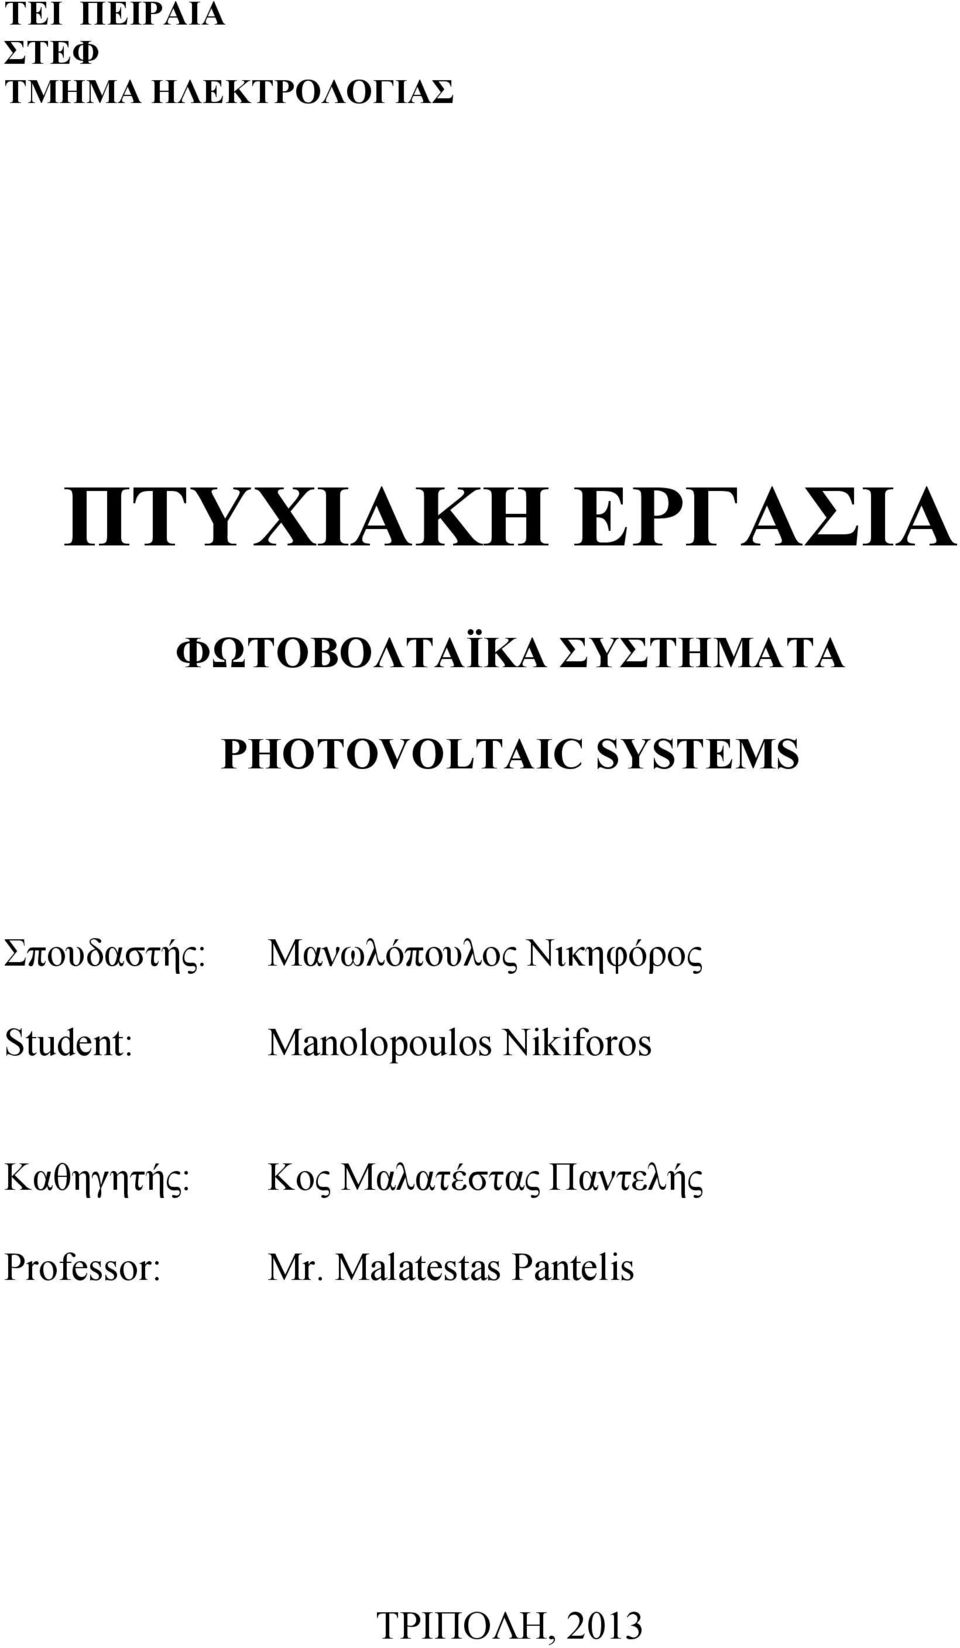 Student: Μανωλόπουλος Νικηφόρος Manolopoulos Nikiforos